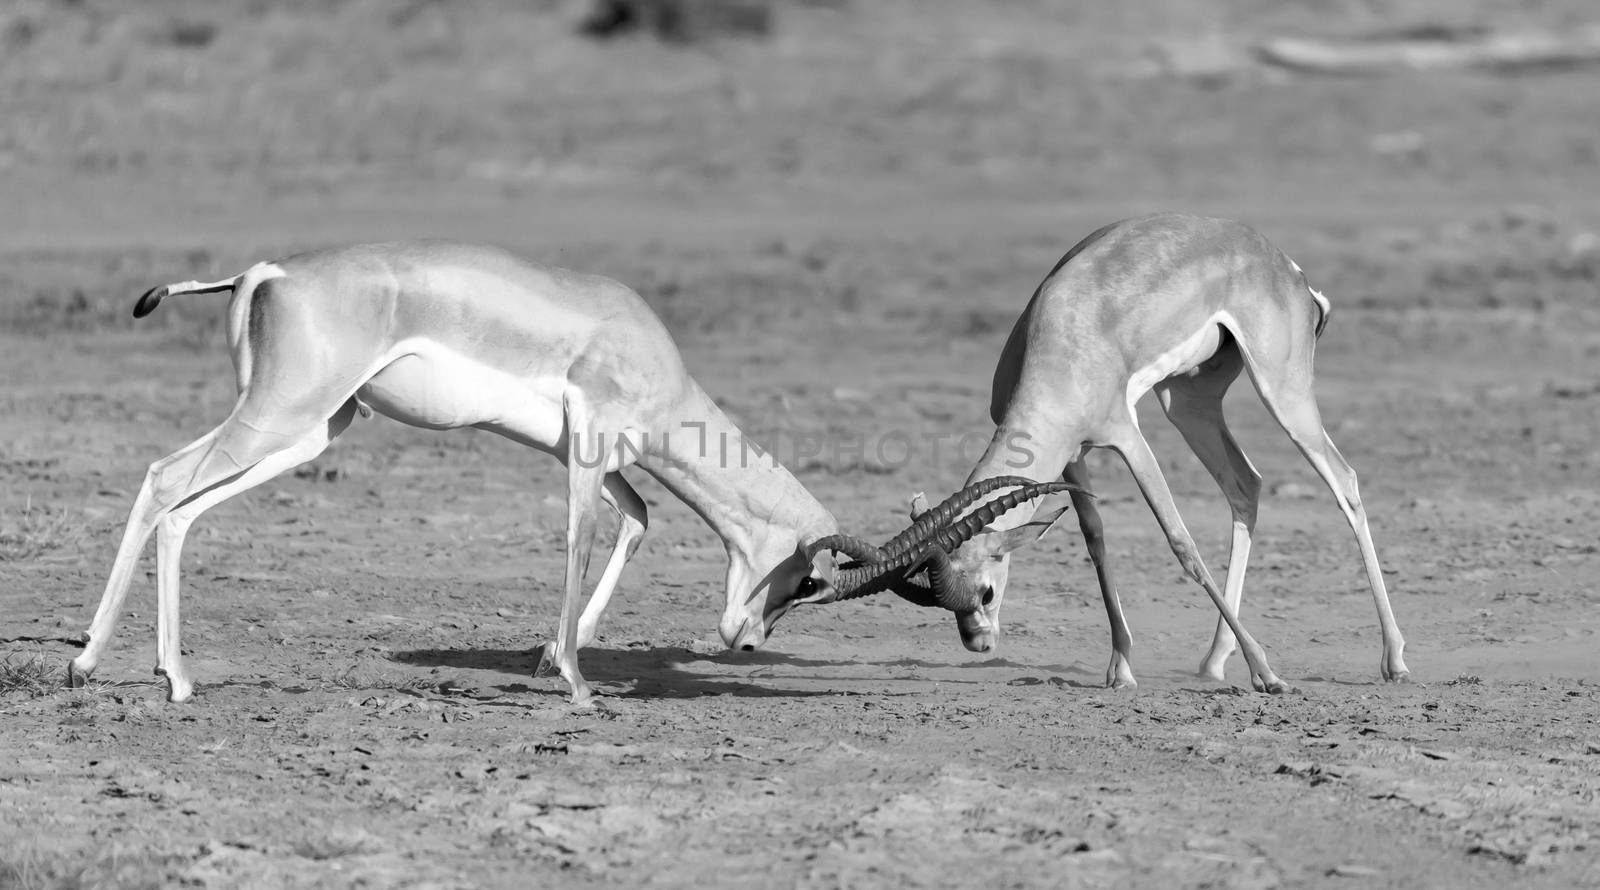 A battle of two Grant Gazelles in the savannah of Kenya by 25ehaag6